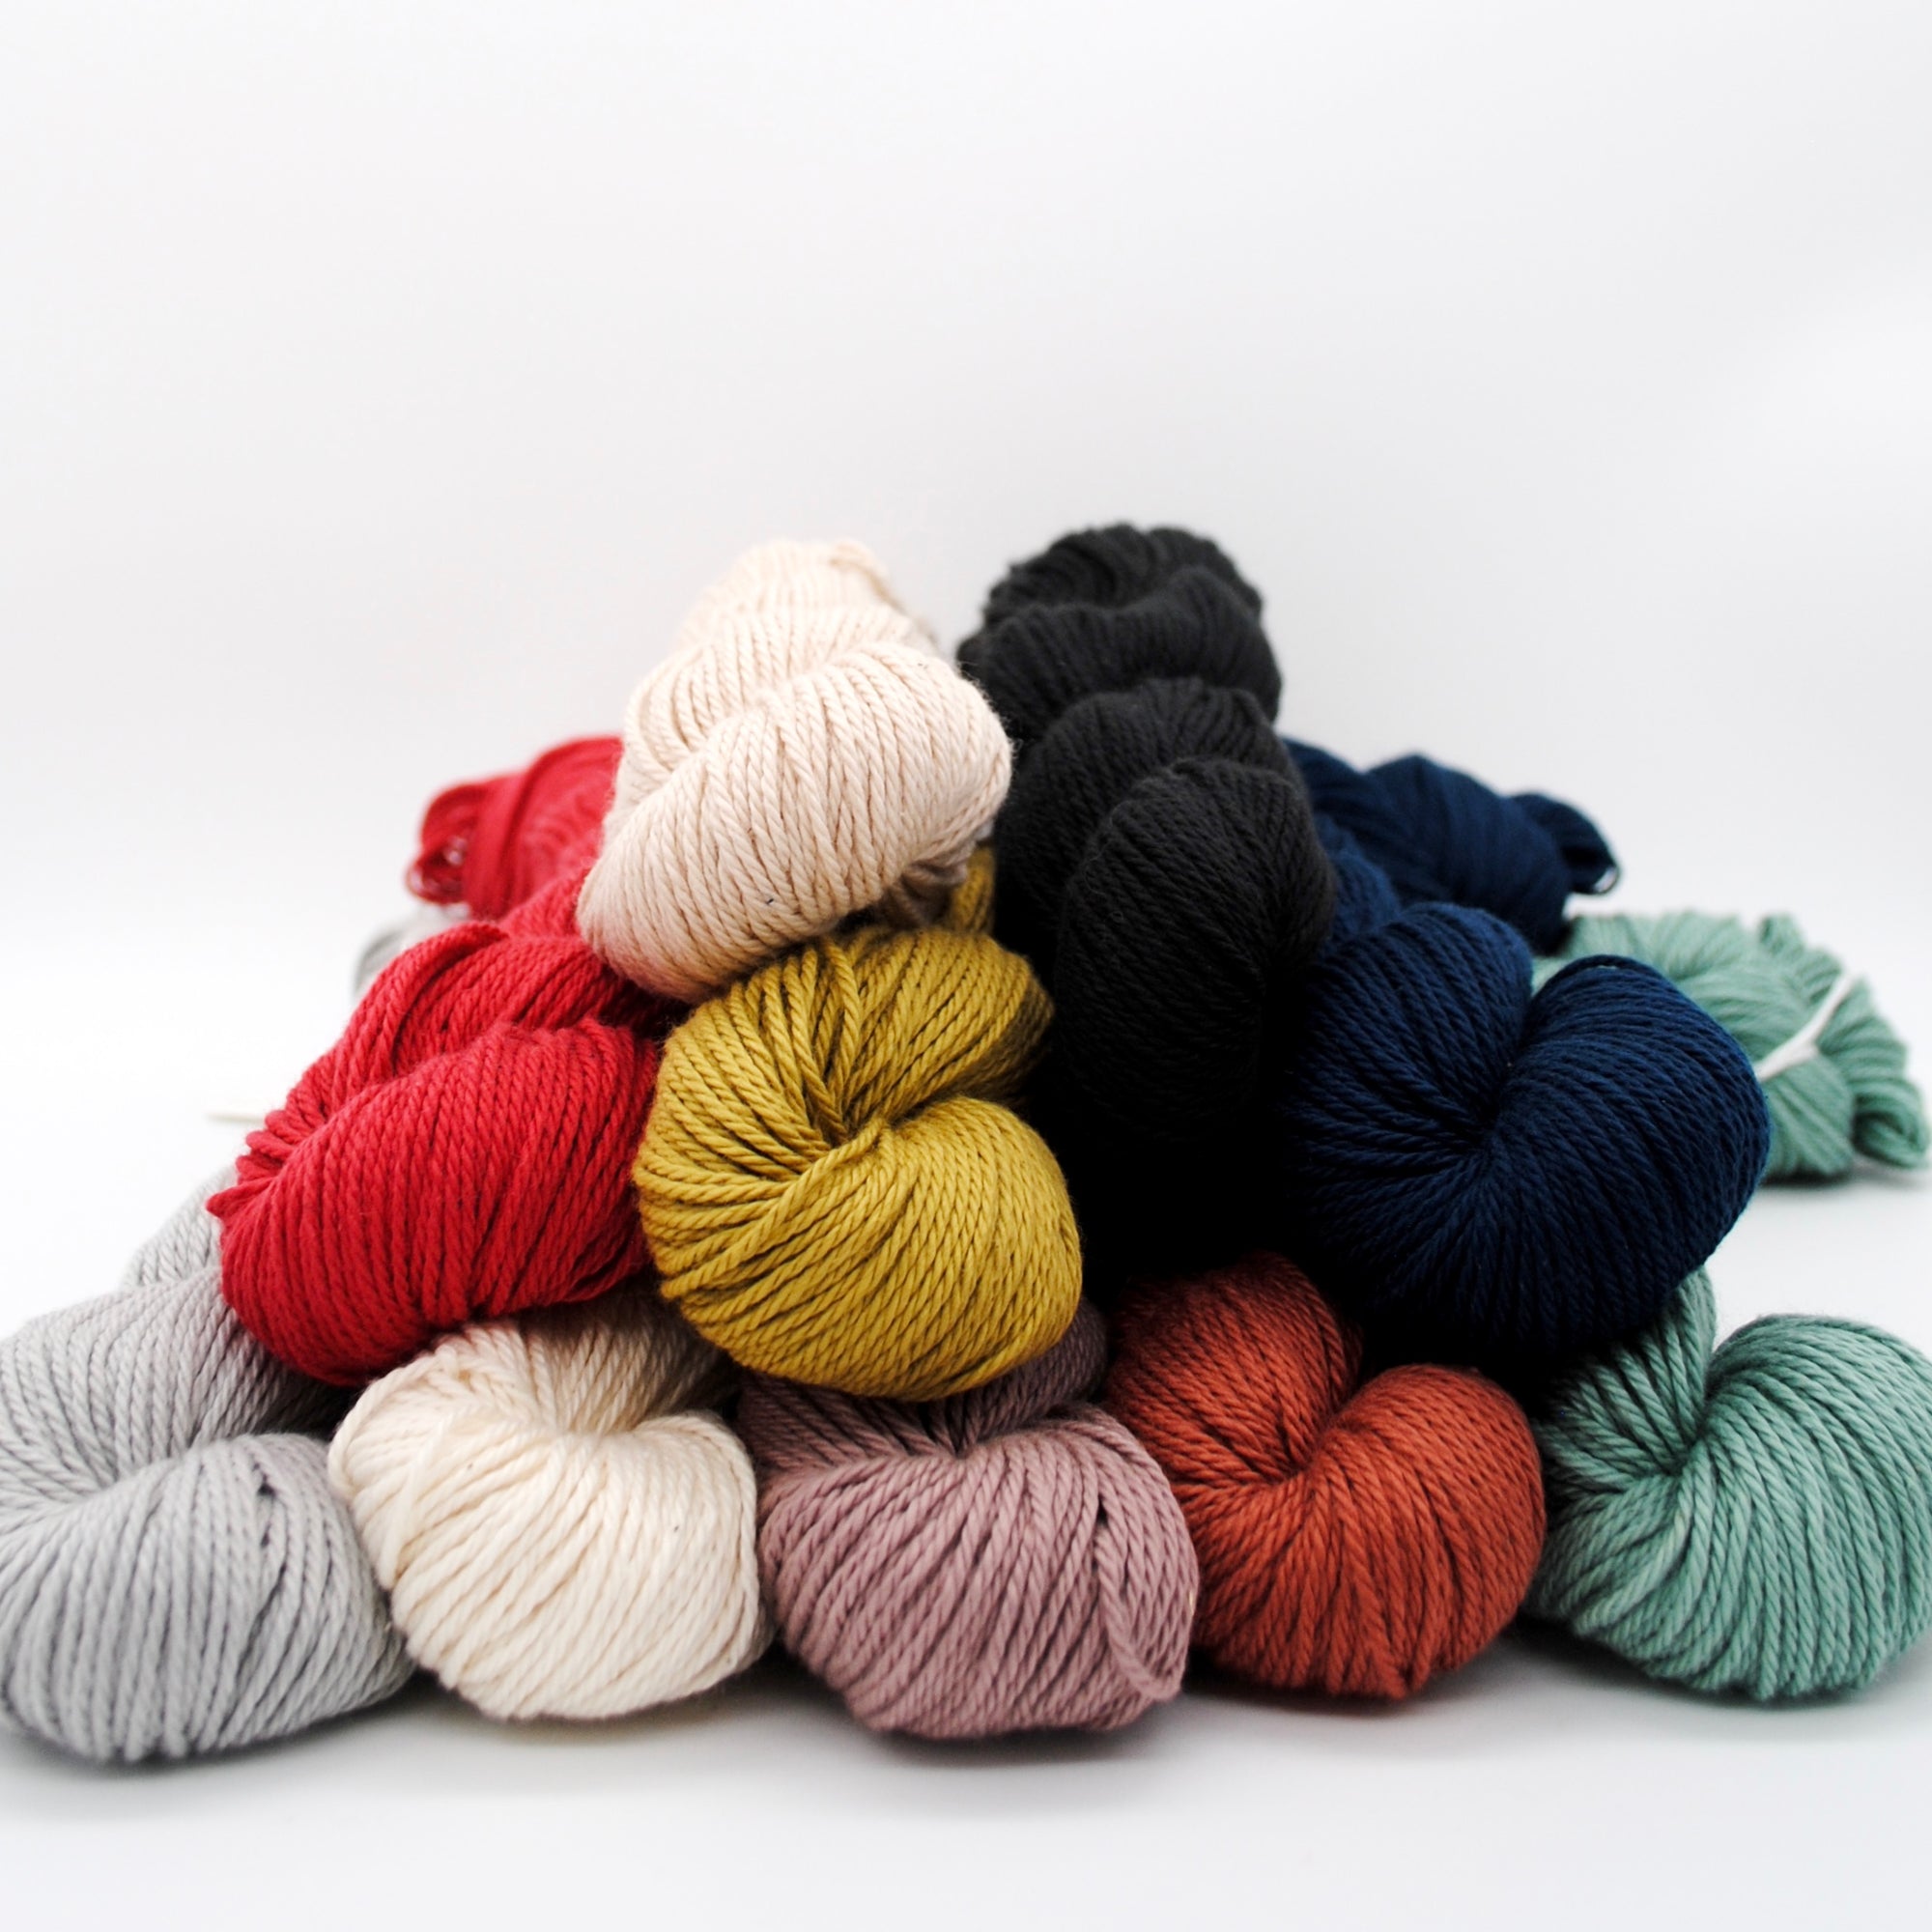  SirTech 100% Milk Cotton Yarn Soft for Crocheting & Knitting  (300 Yards) (1 Skein) (Blue)